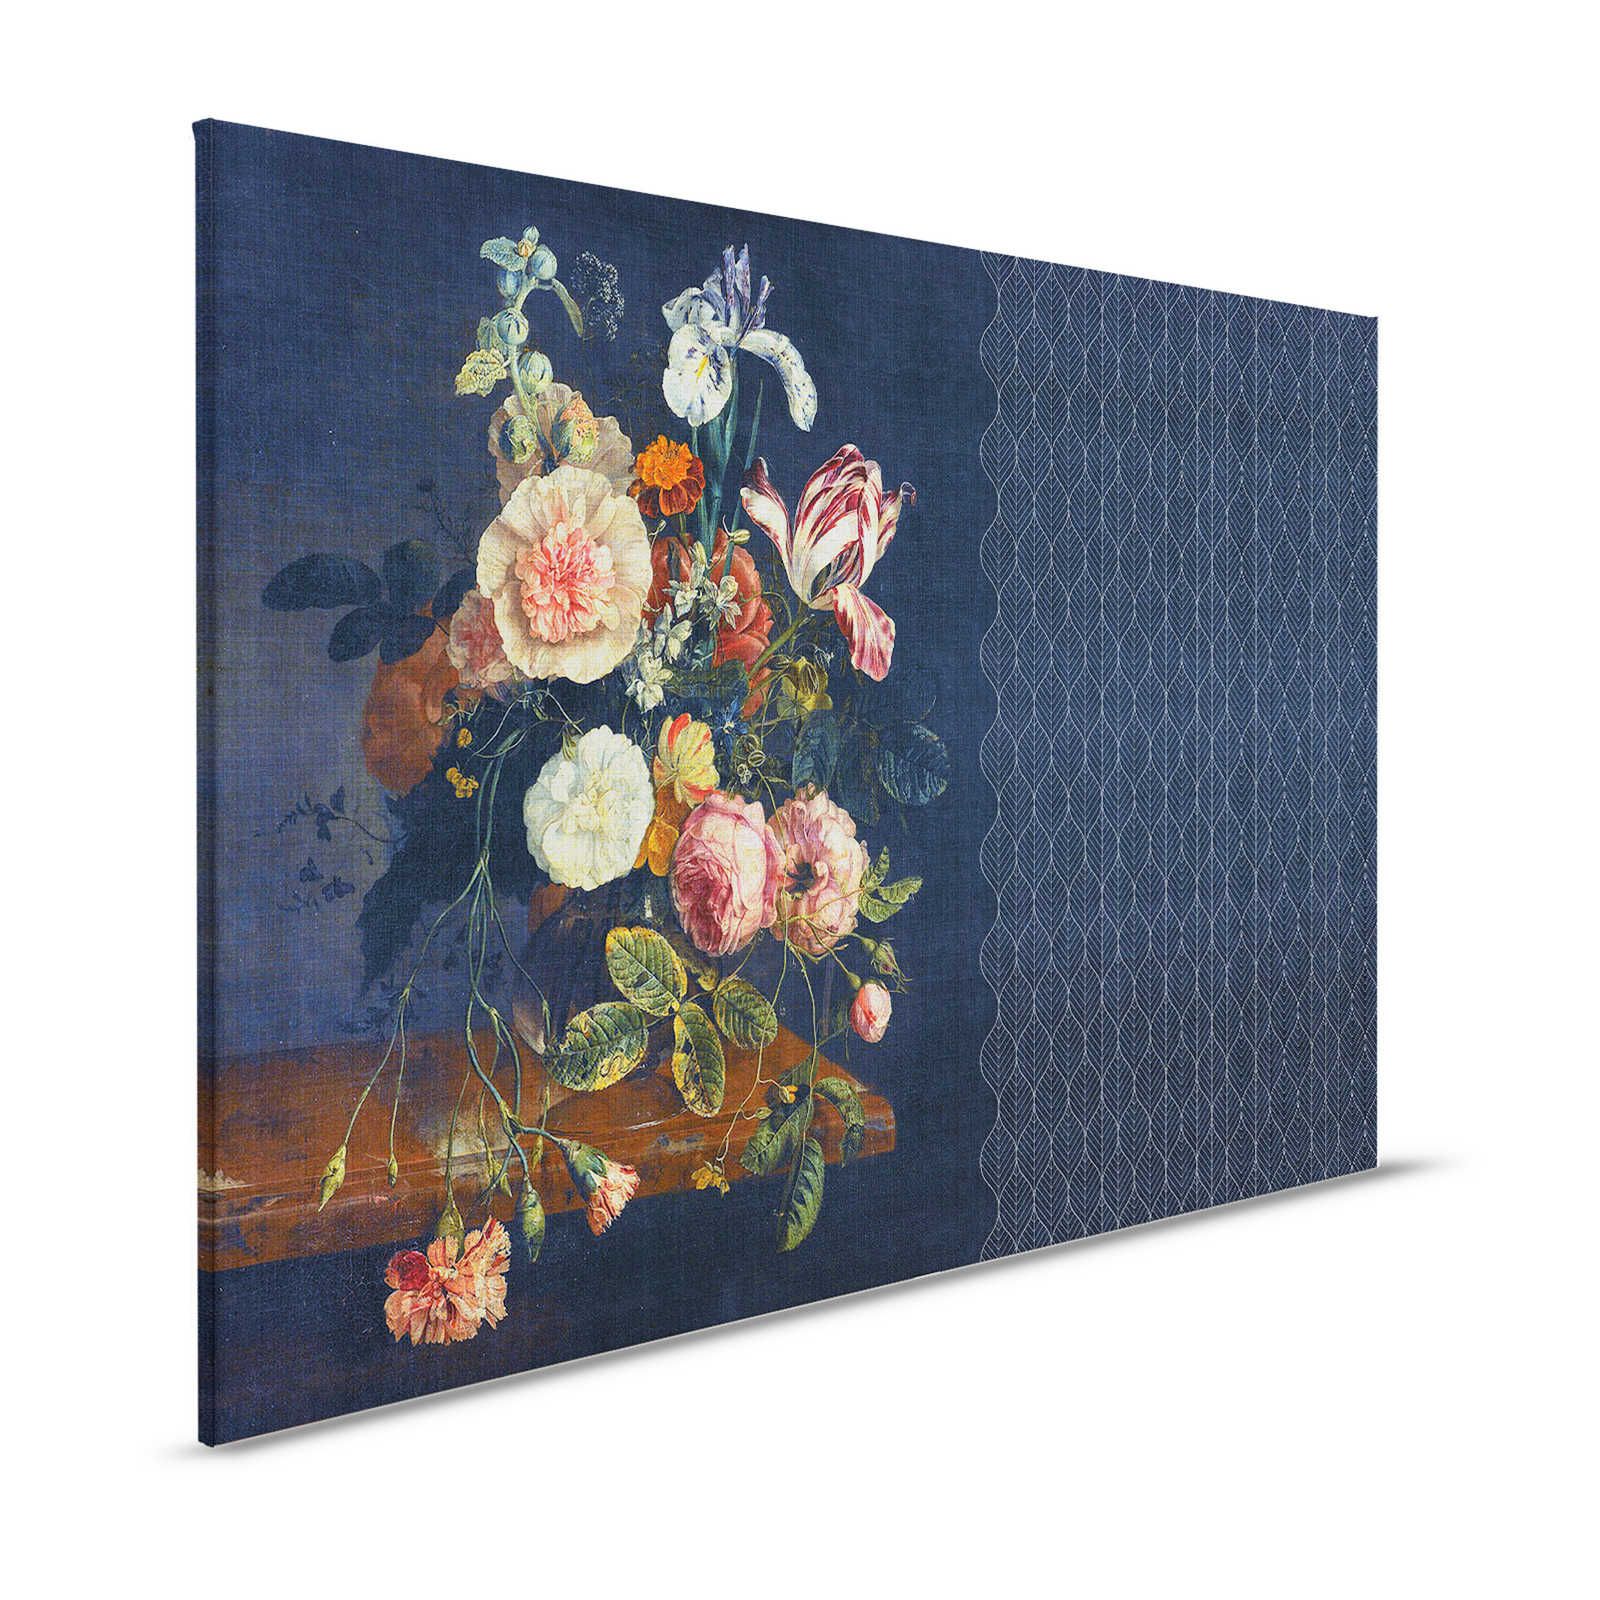 Cortina 2 - Dark Blue Canvas Art Deco Pattern with Bouquet - 1.20 m x 0.80 m
